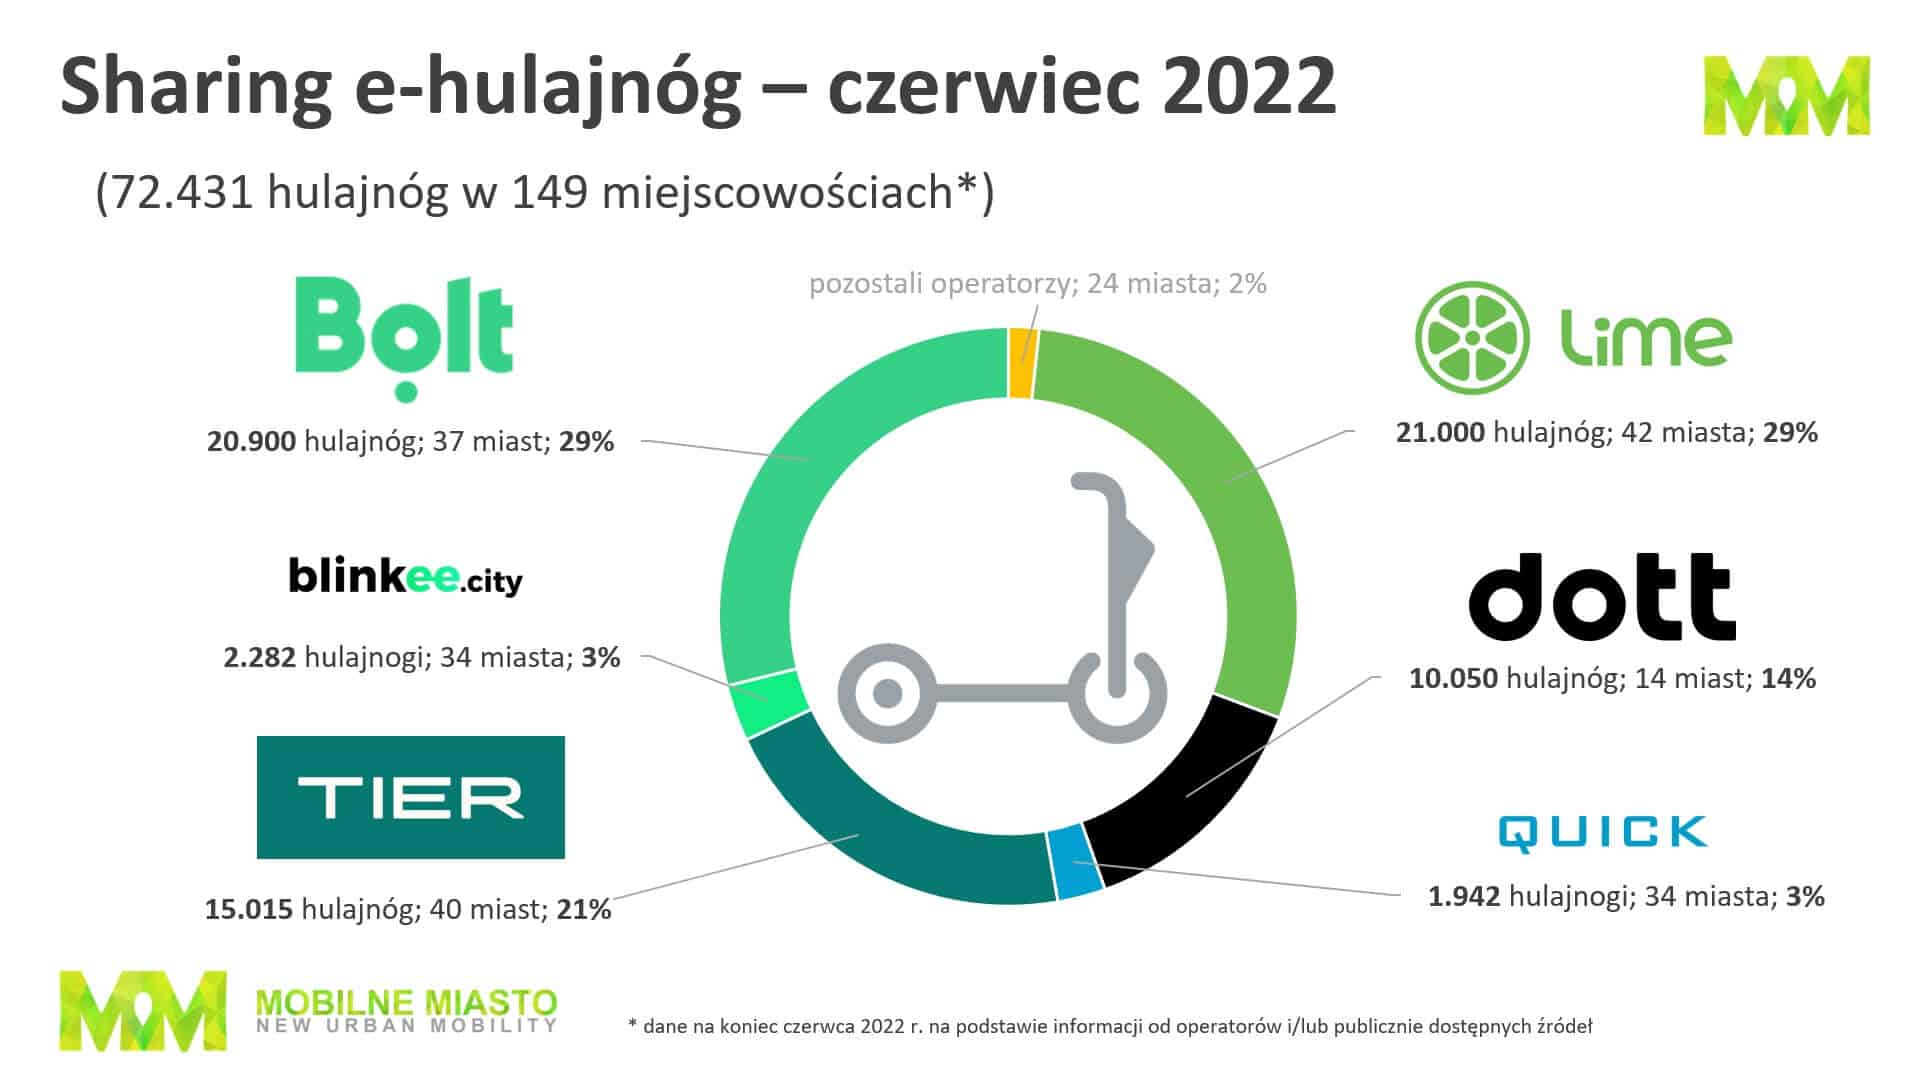 Hulajnogi - sharing - czerwiec 2022